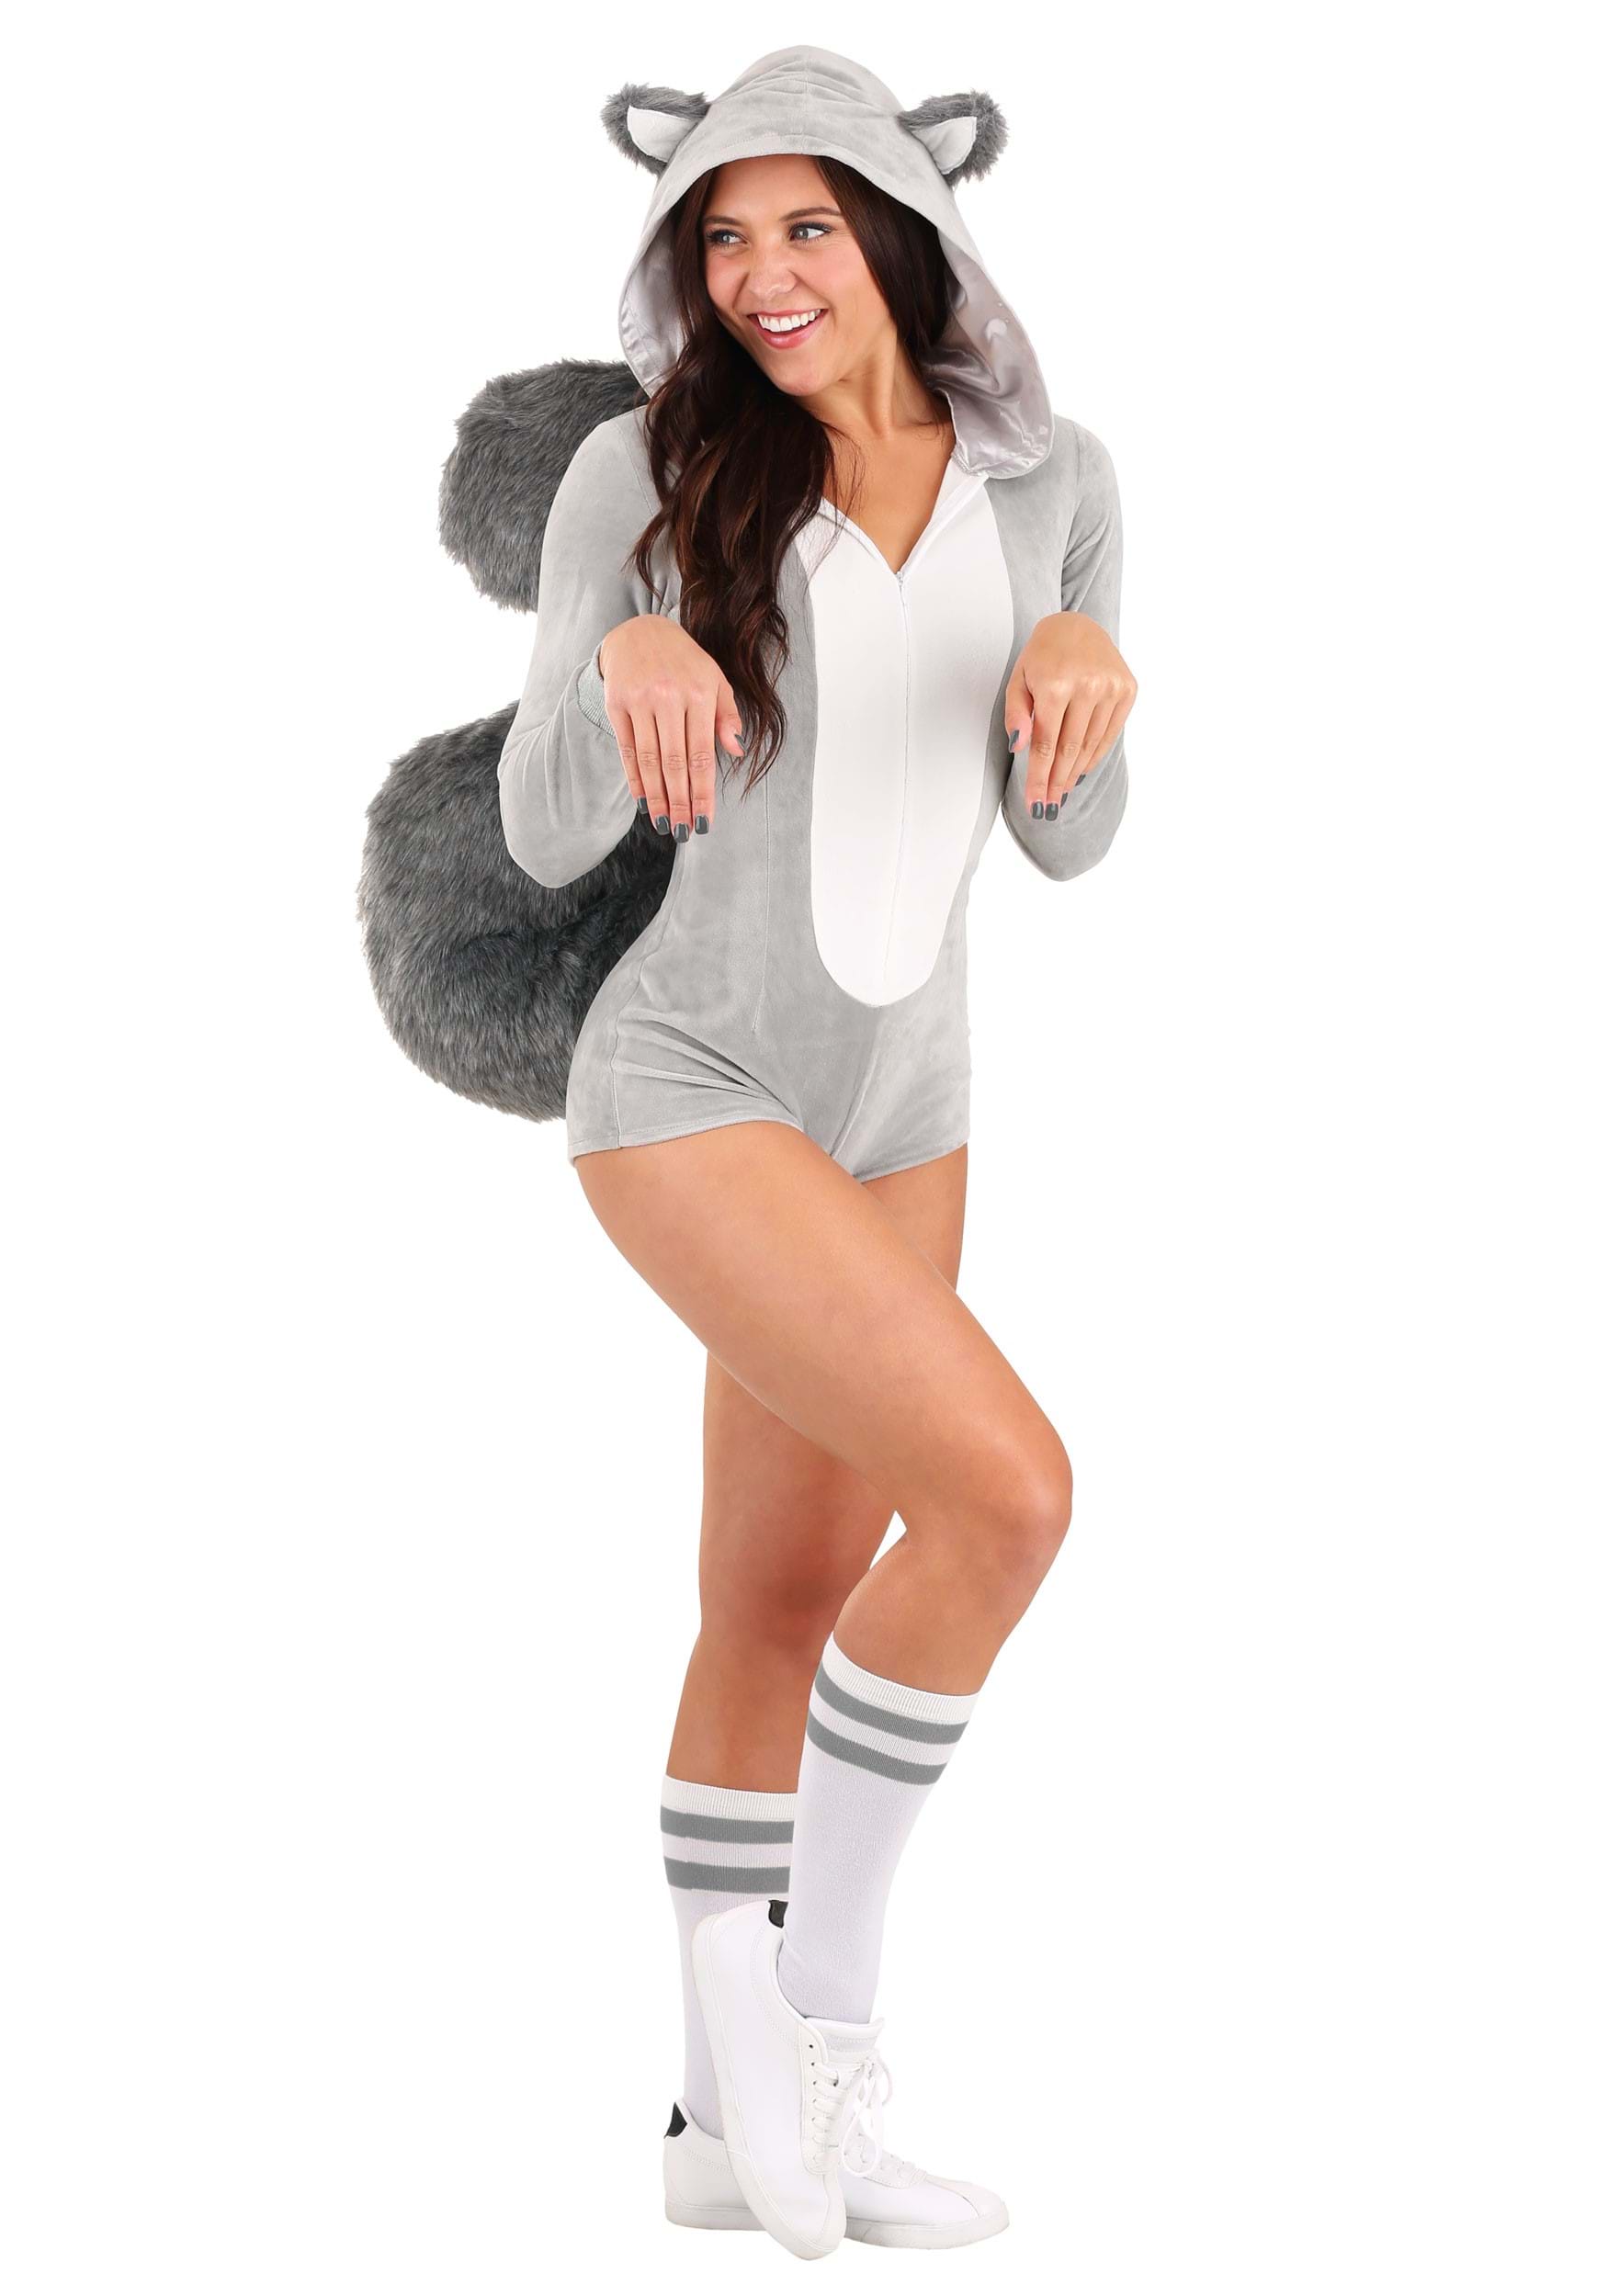 Image of Sassy Squirrel Women's Costume ID FUN1353AD-L